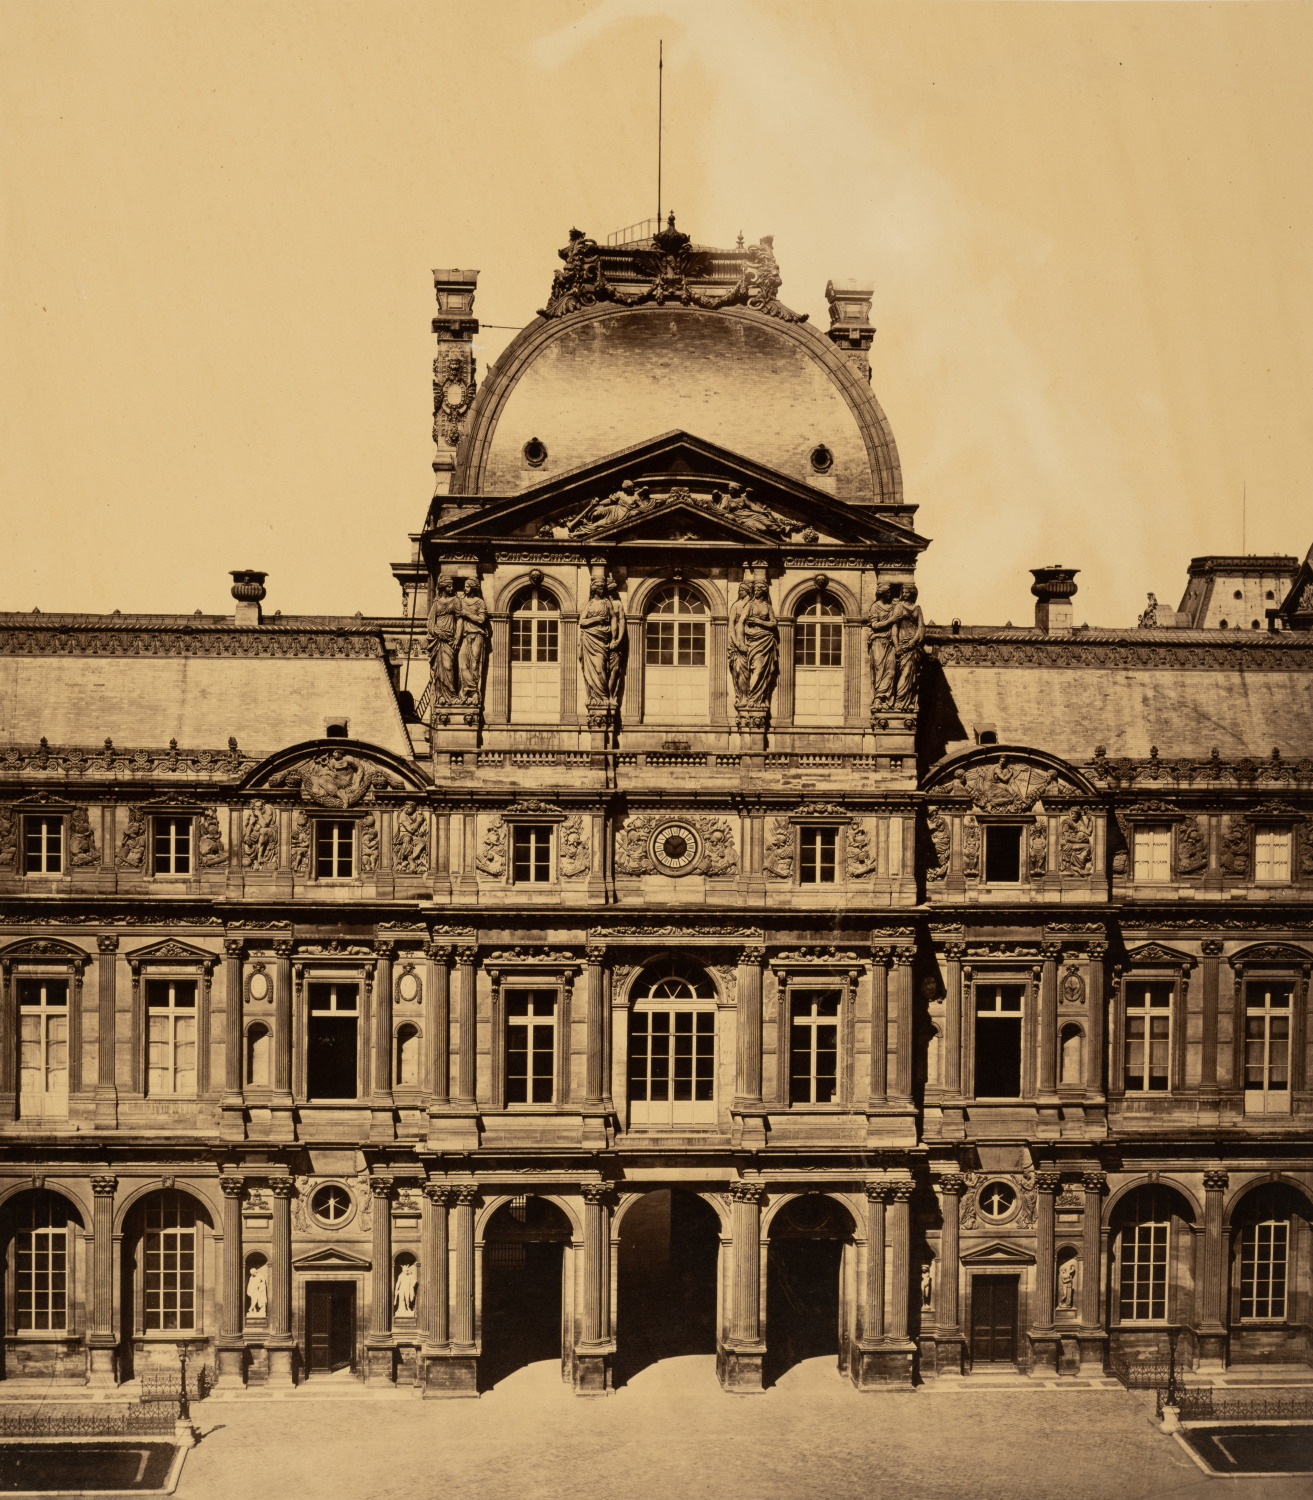 Baldus, vintage Louvre print, cardboard size: 56 x 46.5 cm albumin print